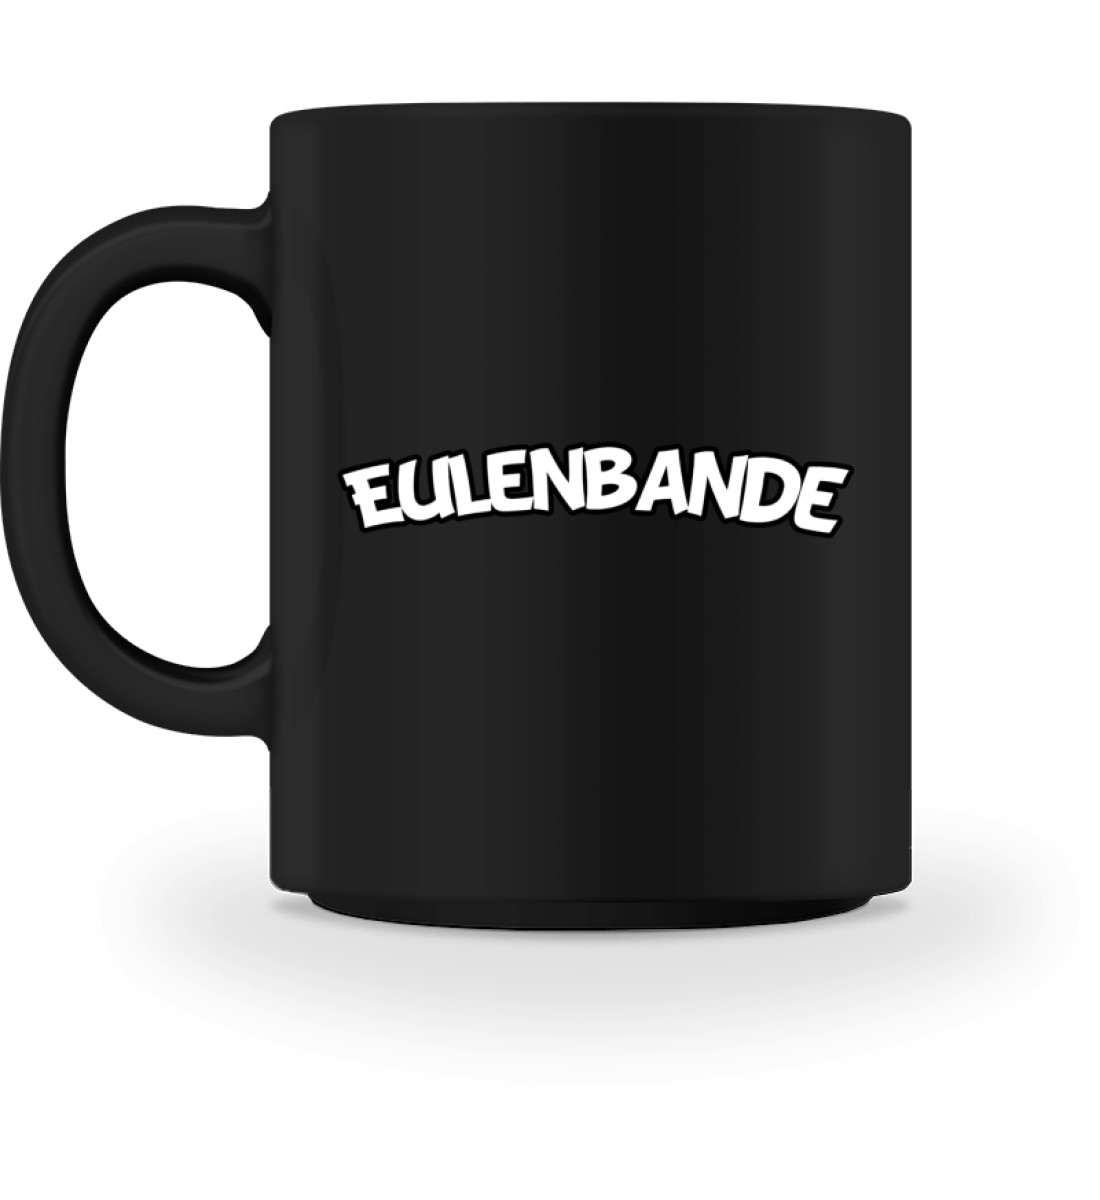 EulenTassenBande - Tasse-16